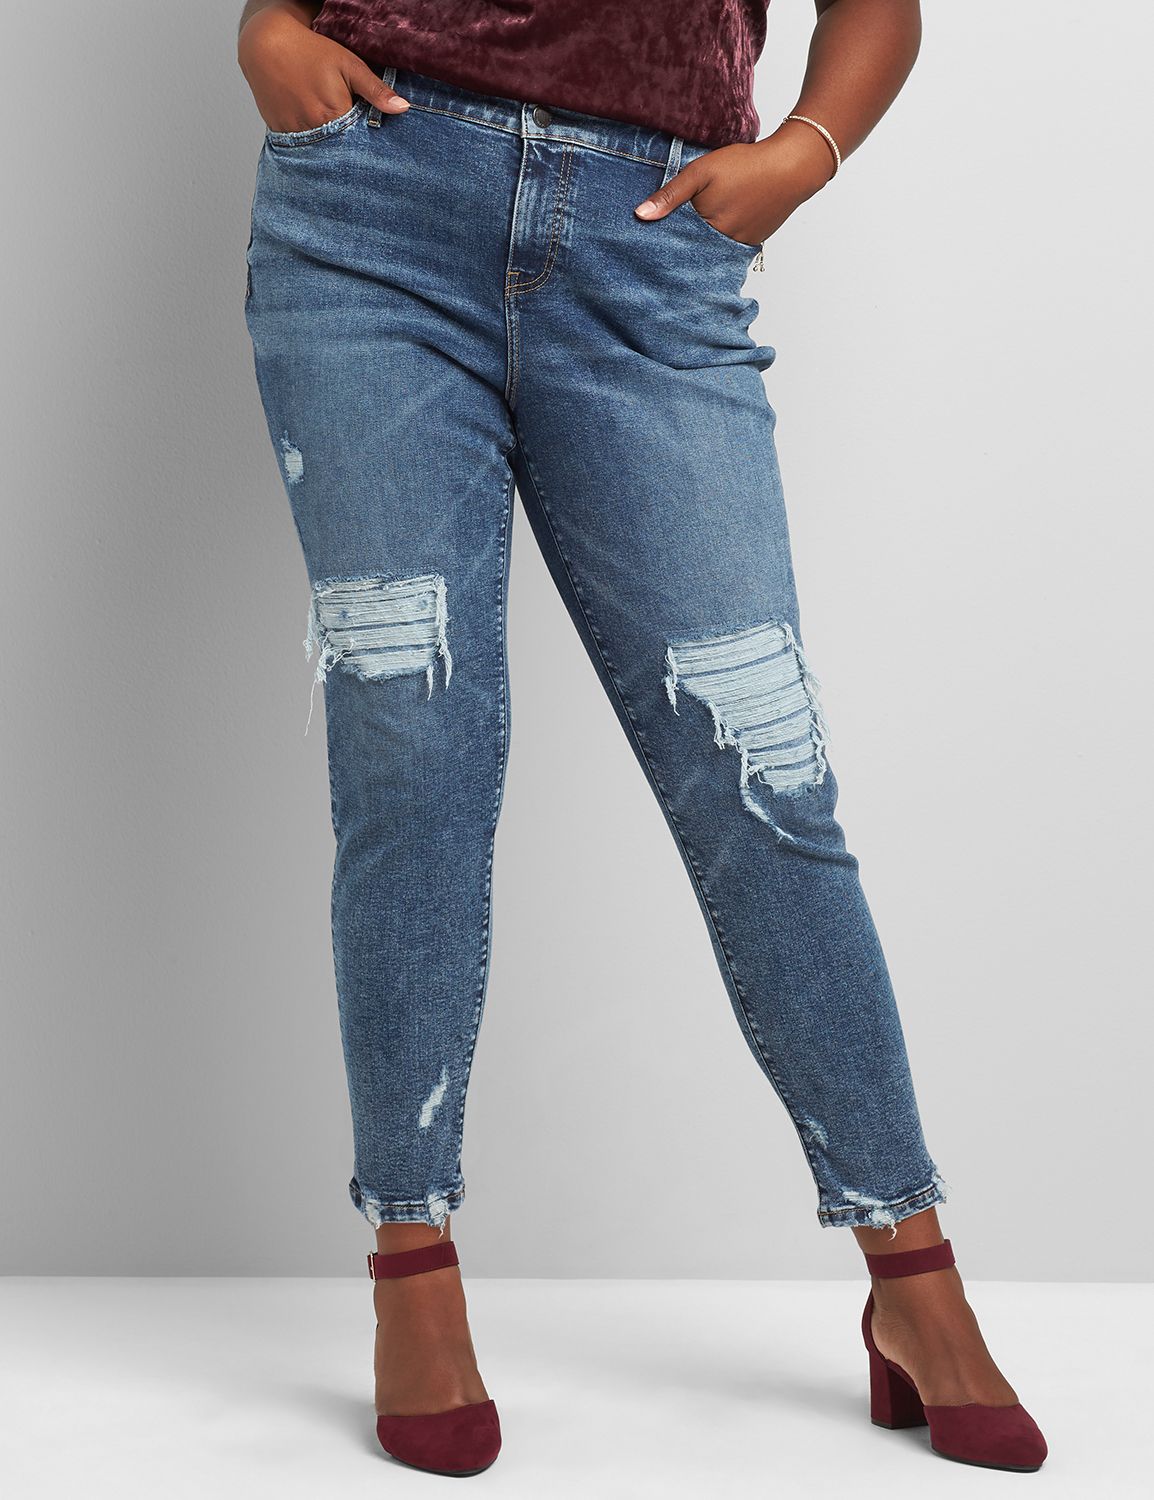 lane bryant women's jeans